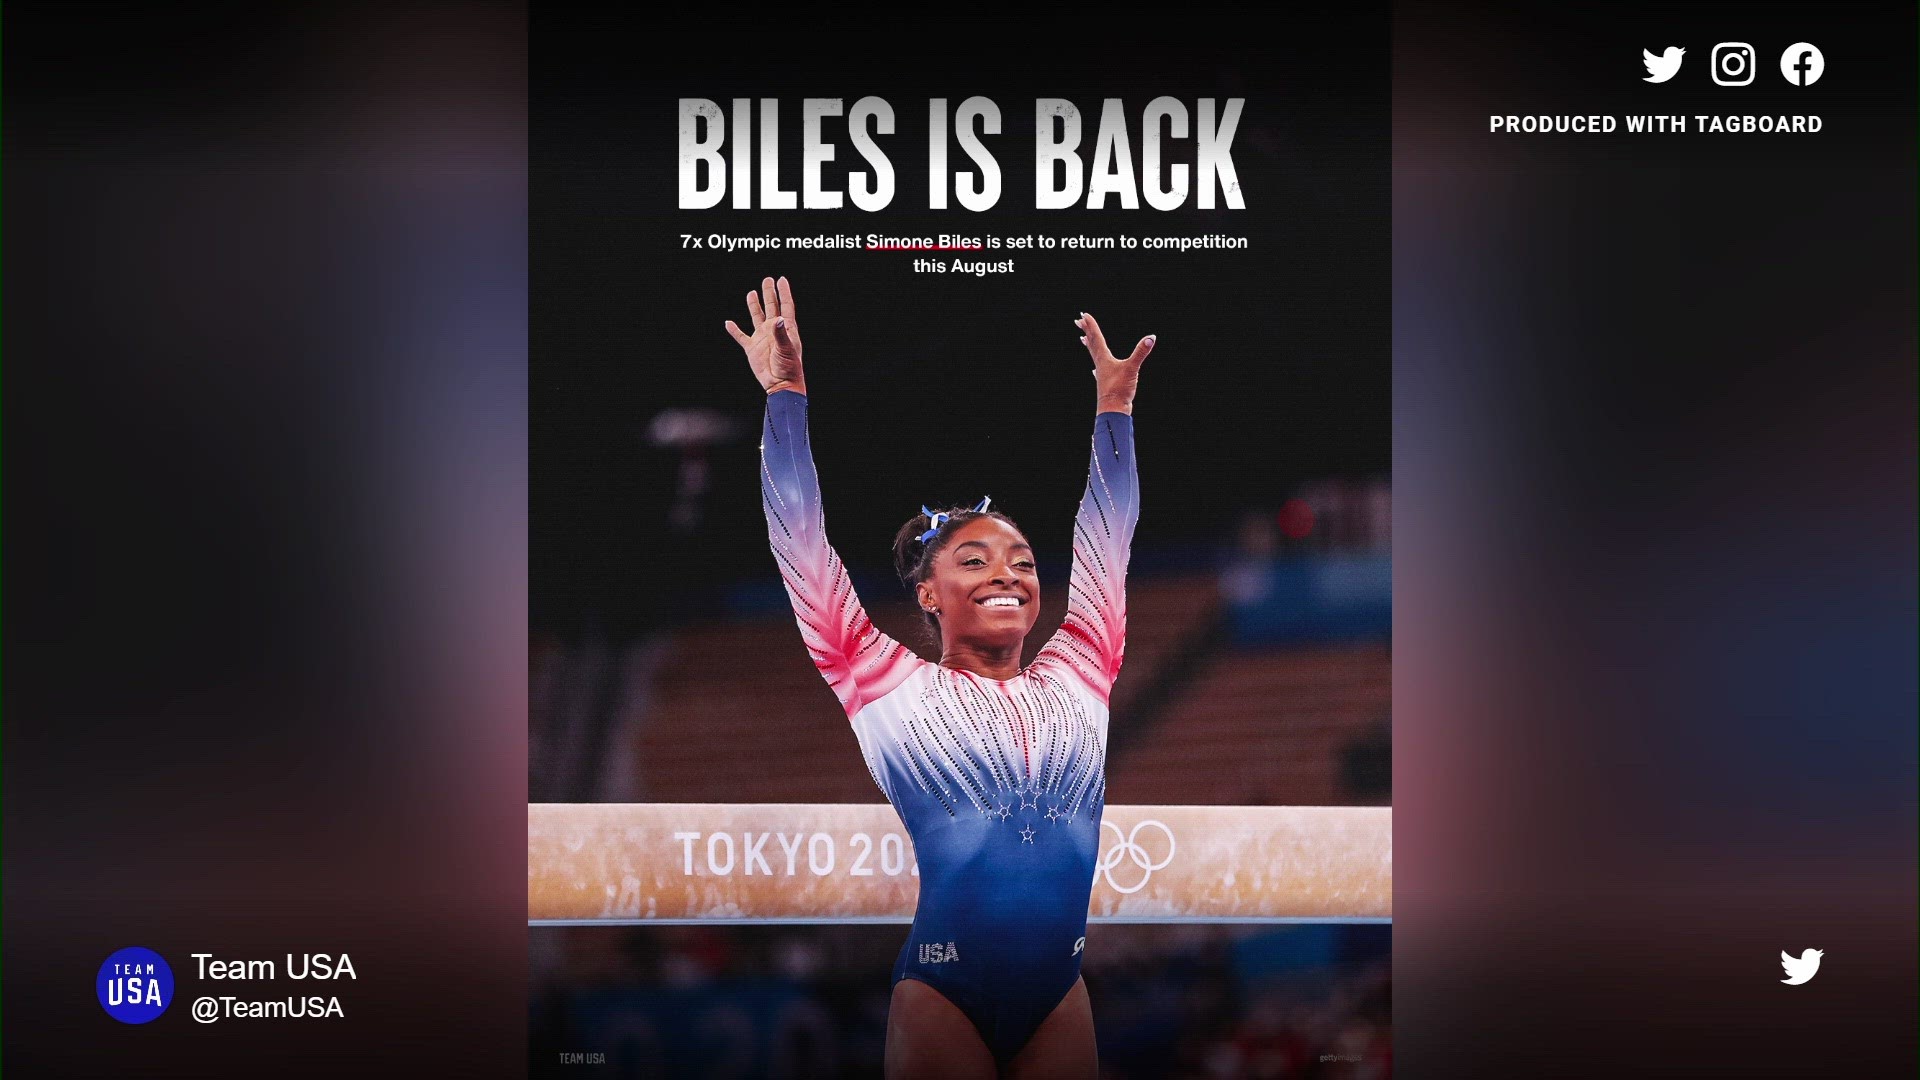 Simone Biles return to gymnastics competition announced